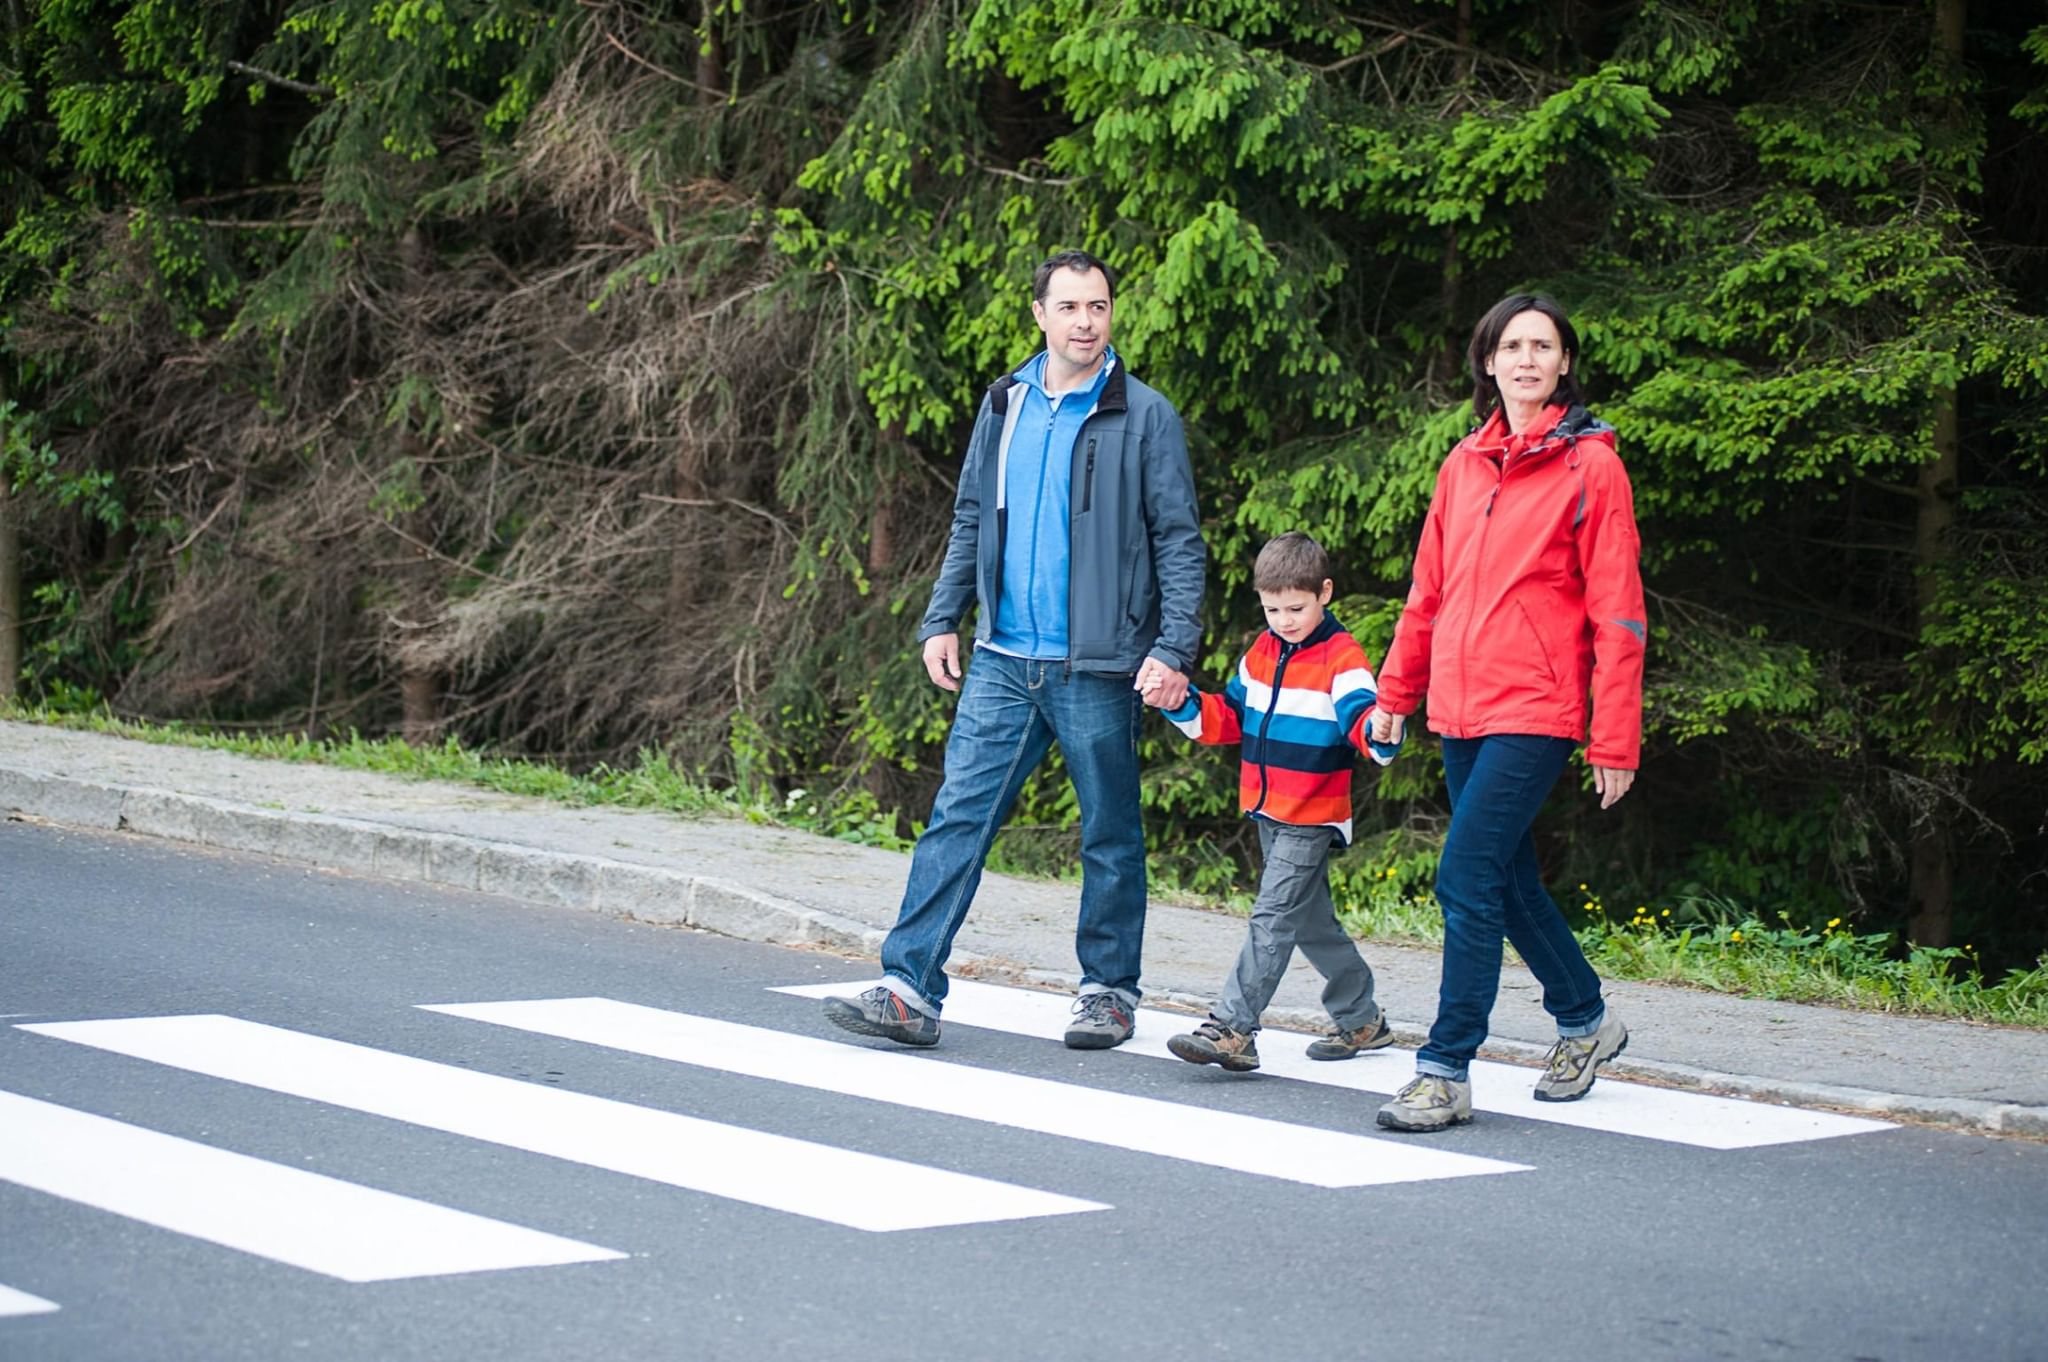 Беседа дети на дороге. Дети на дороге. Пешеход на дороге. Дети переходят дорогу. Родители переходят дорогу с детьми.